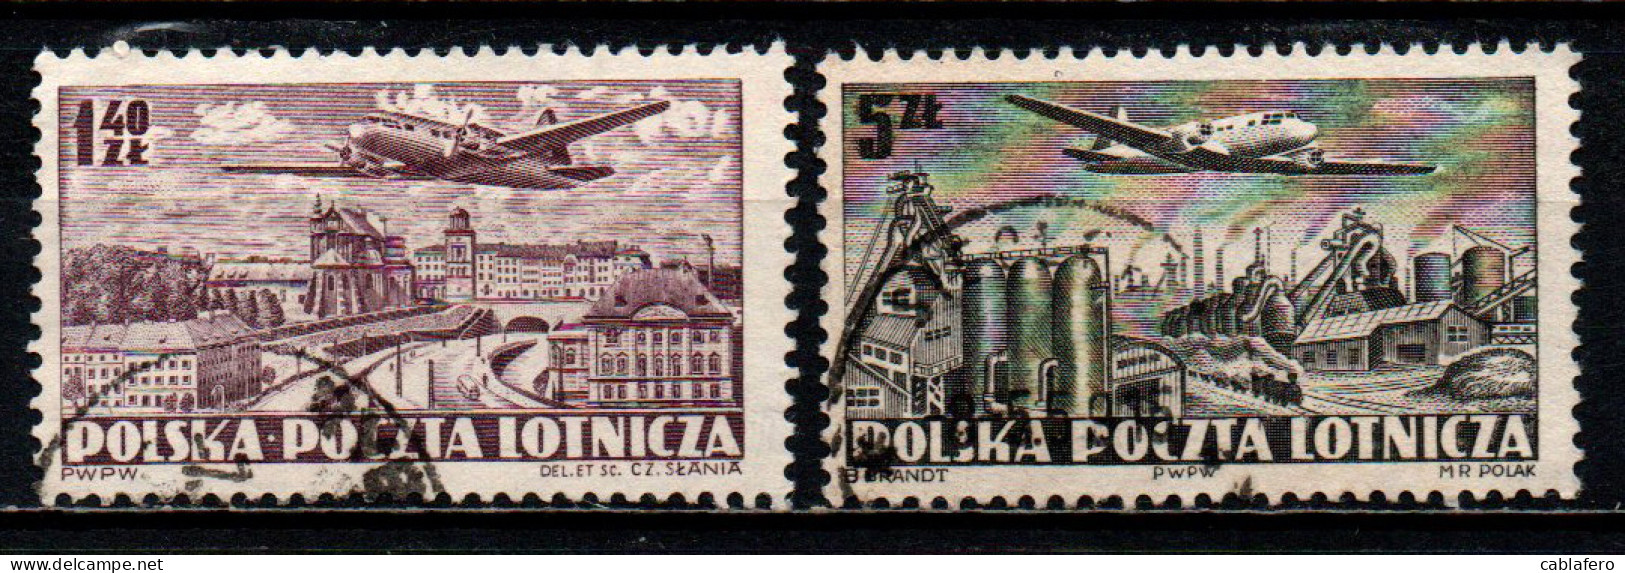 POLONIA - 1952 - AEREO CHE SORVOLA LA POLONIA - USATI - Used Stamps